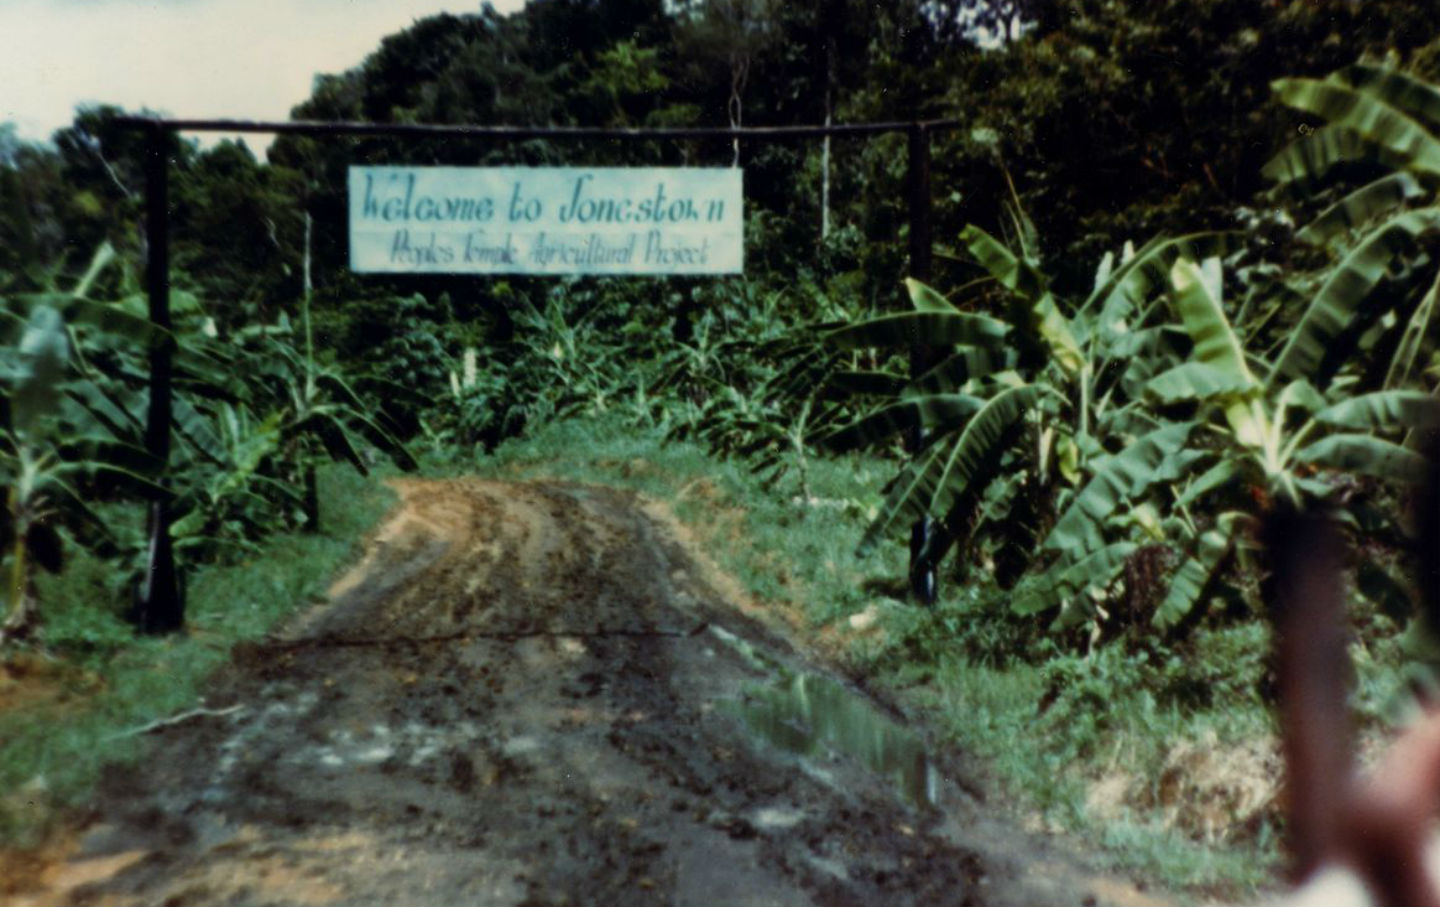 November 18, 1978: Nearly 1,000 Die at the People’s Temple in Jonestown